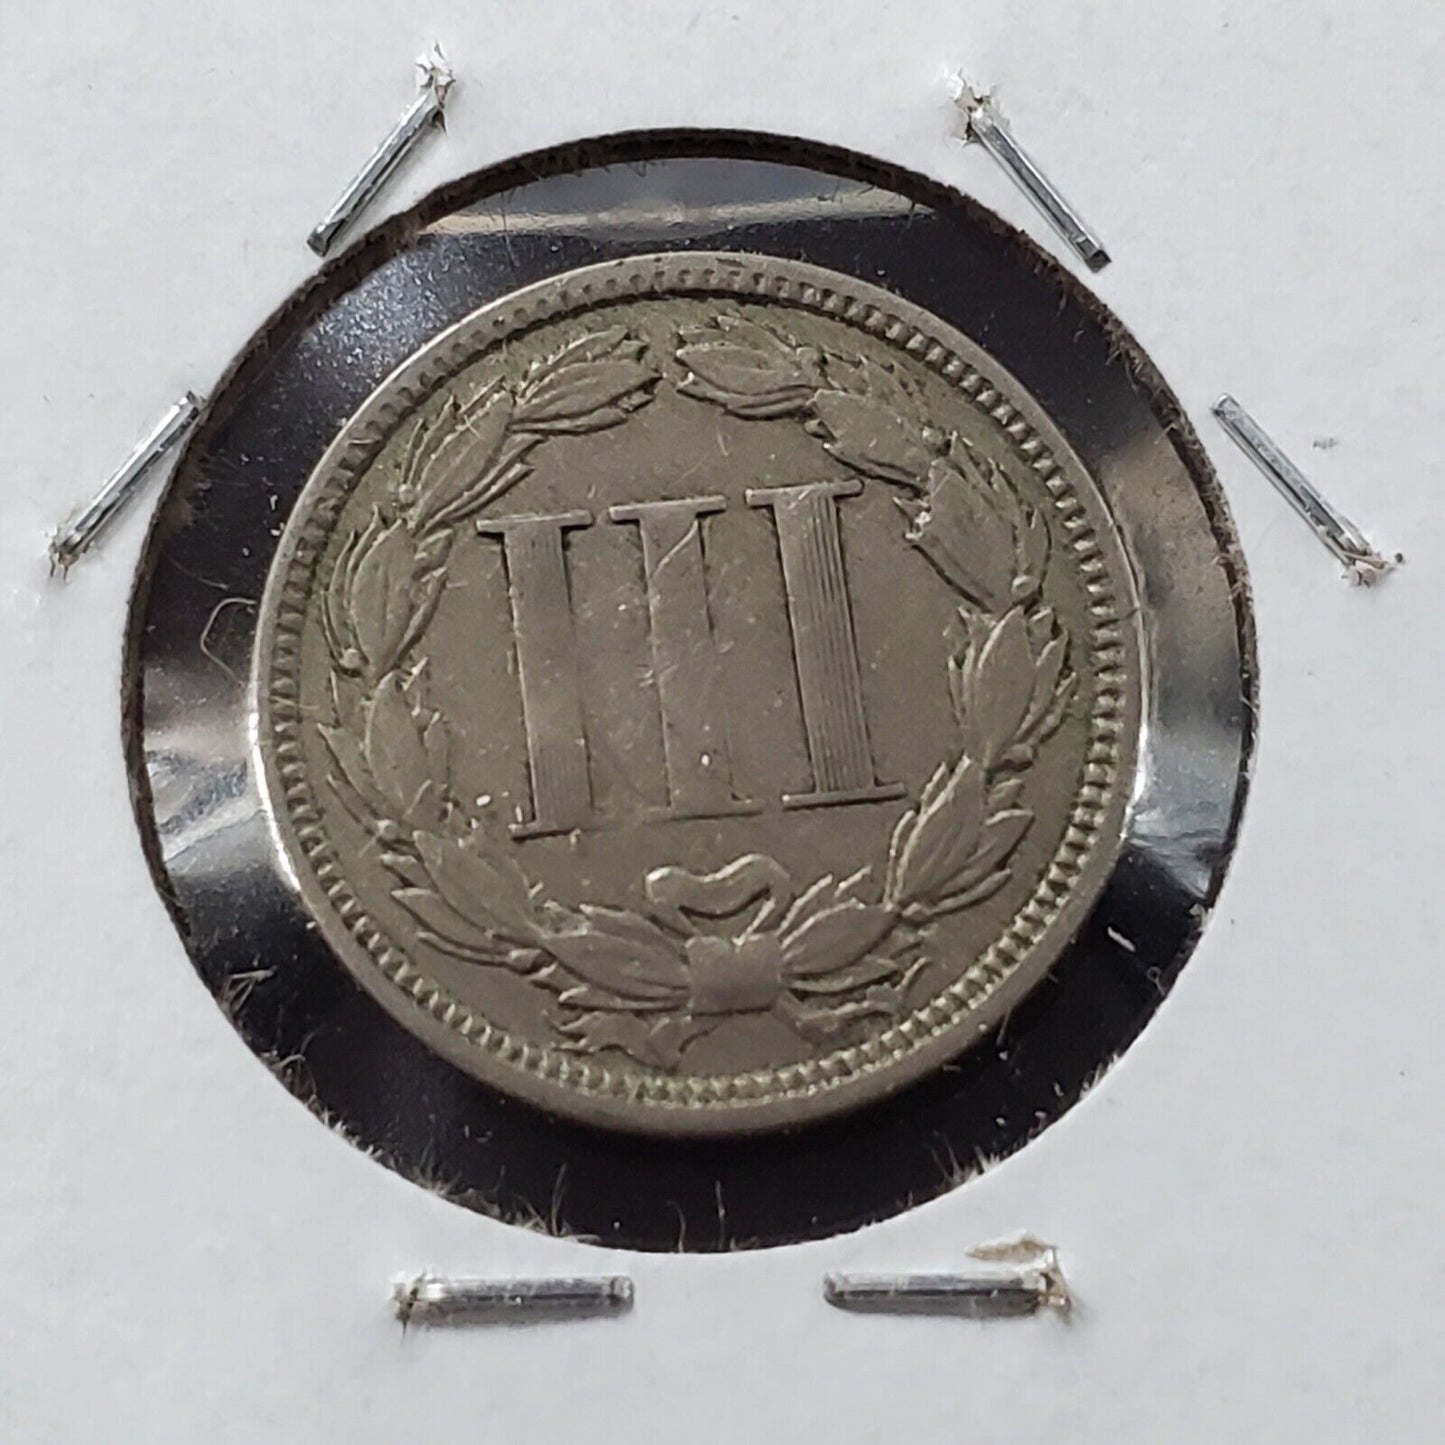 1865 P 3c Liberty Three Cent Nickel Coin AVG Retained Cudd Error VF